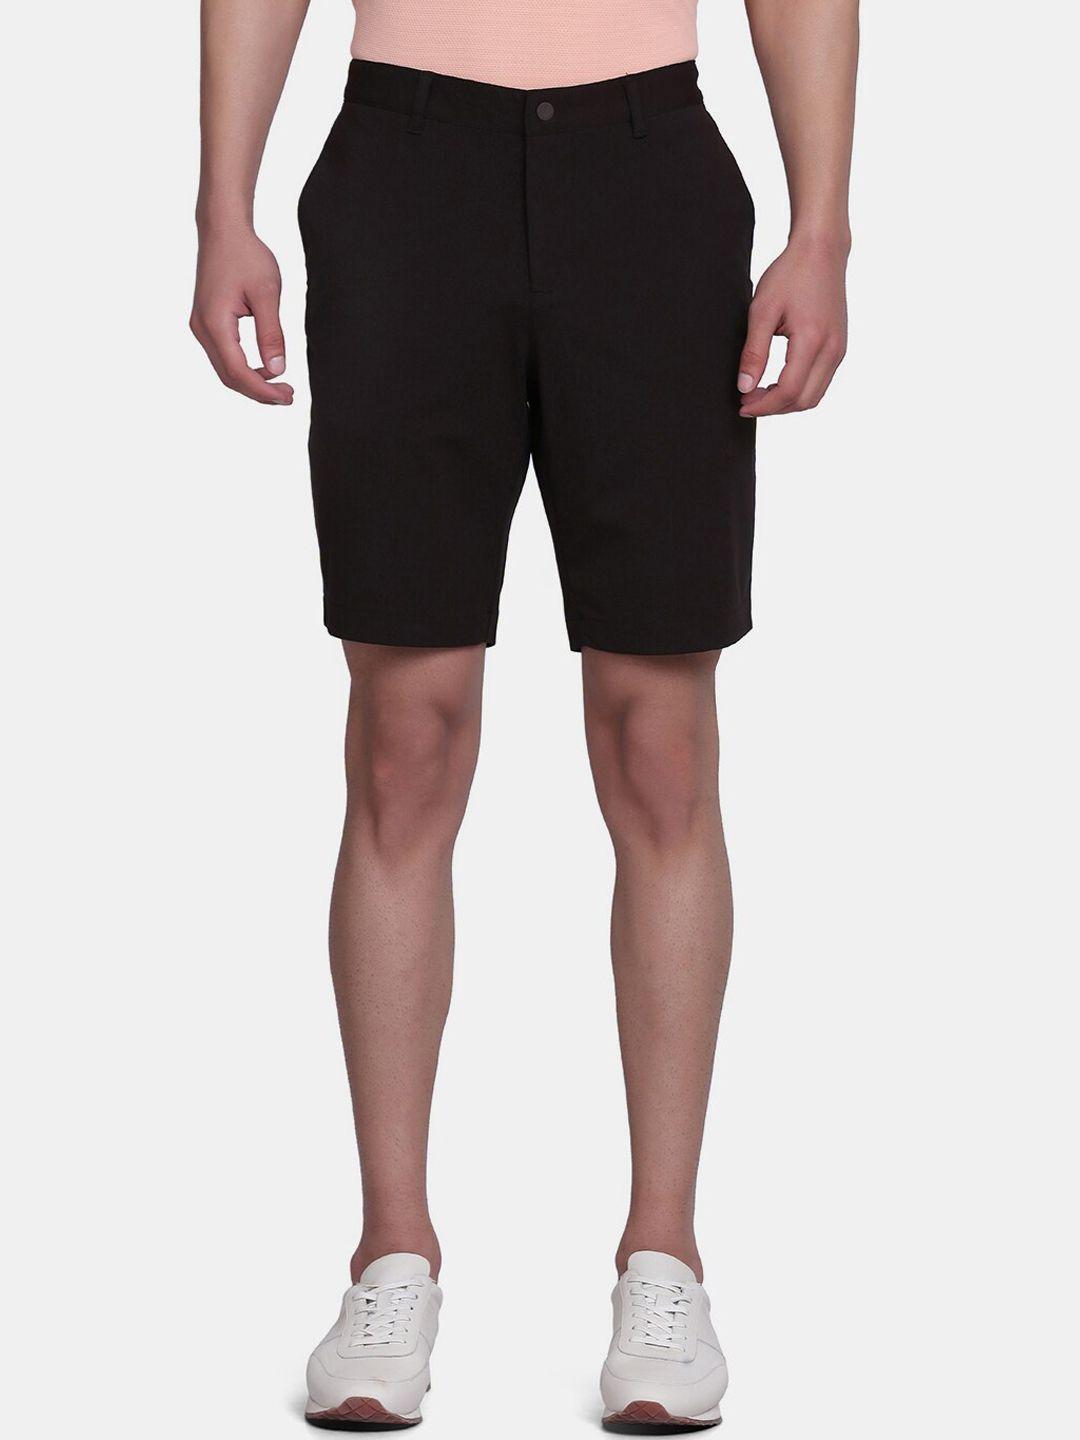 blackberrys-men-black-bs-10-slim-fit-low-rise-shorts